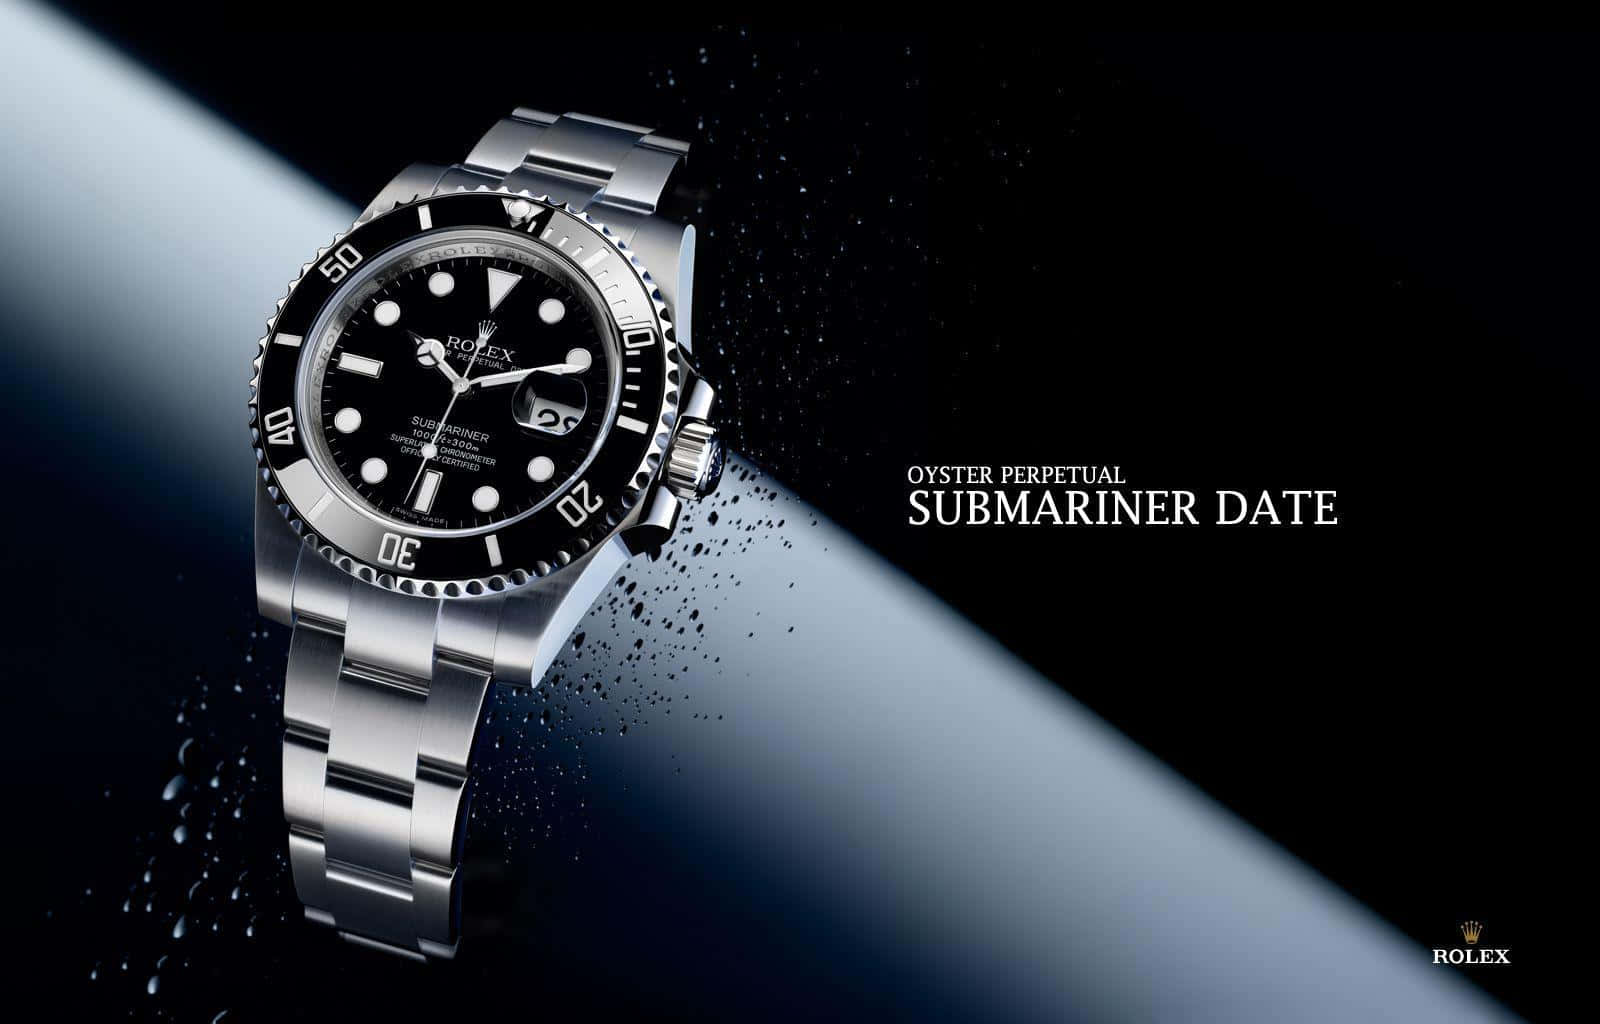 Elegant Rolex Timepiece Showcased on Black Velvet